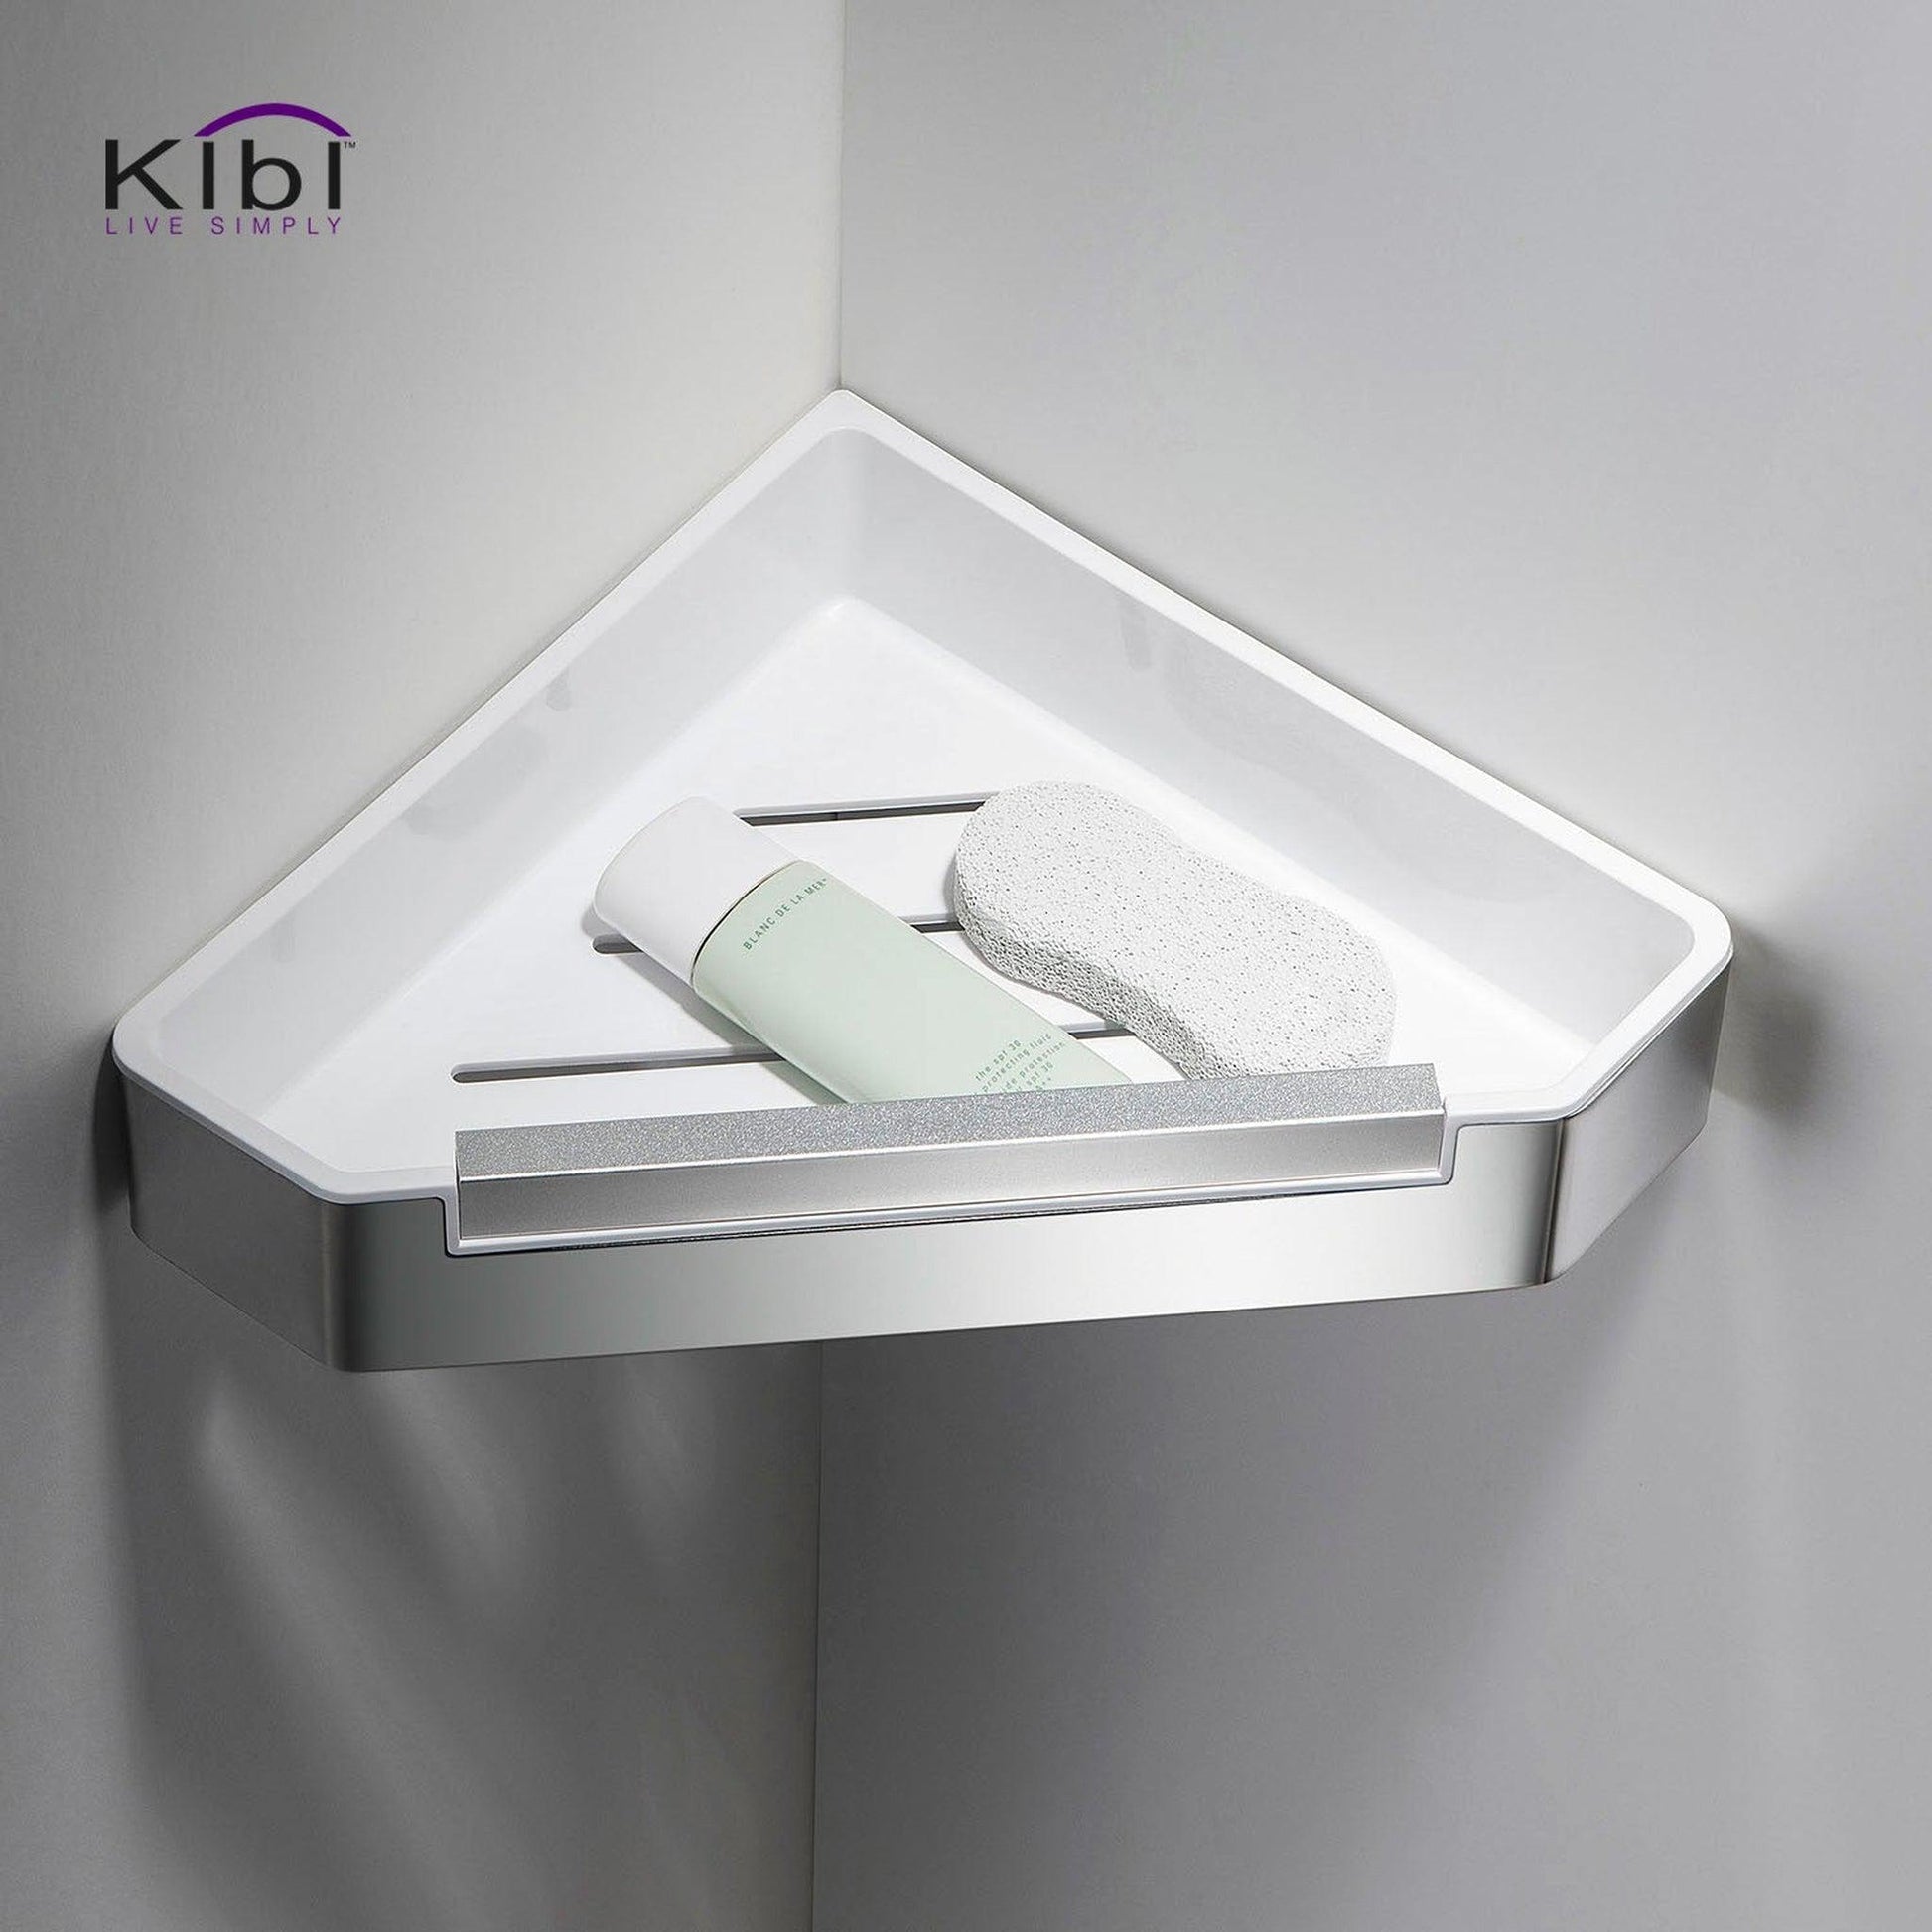 KIBI Deco 9" x 2" Bathroom Corner Basket in Chrome Finish